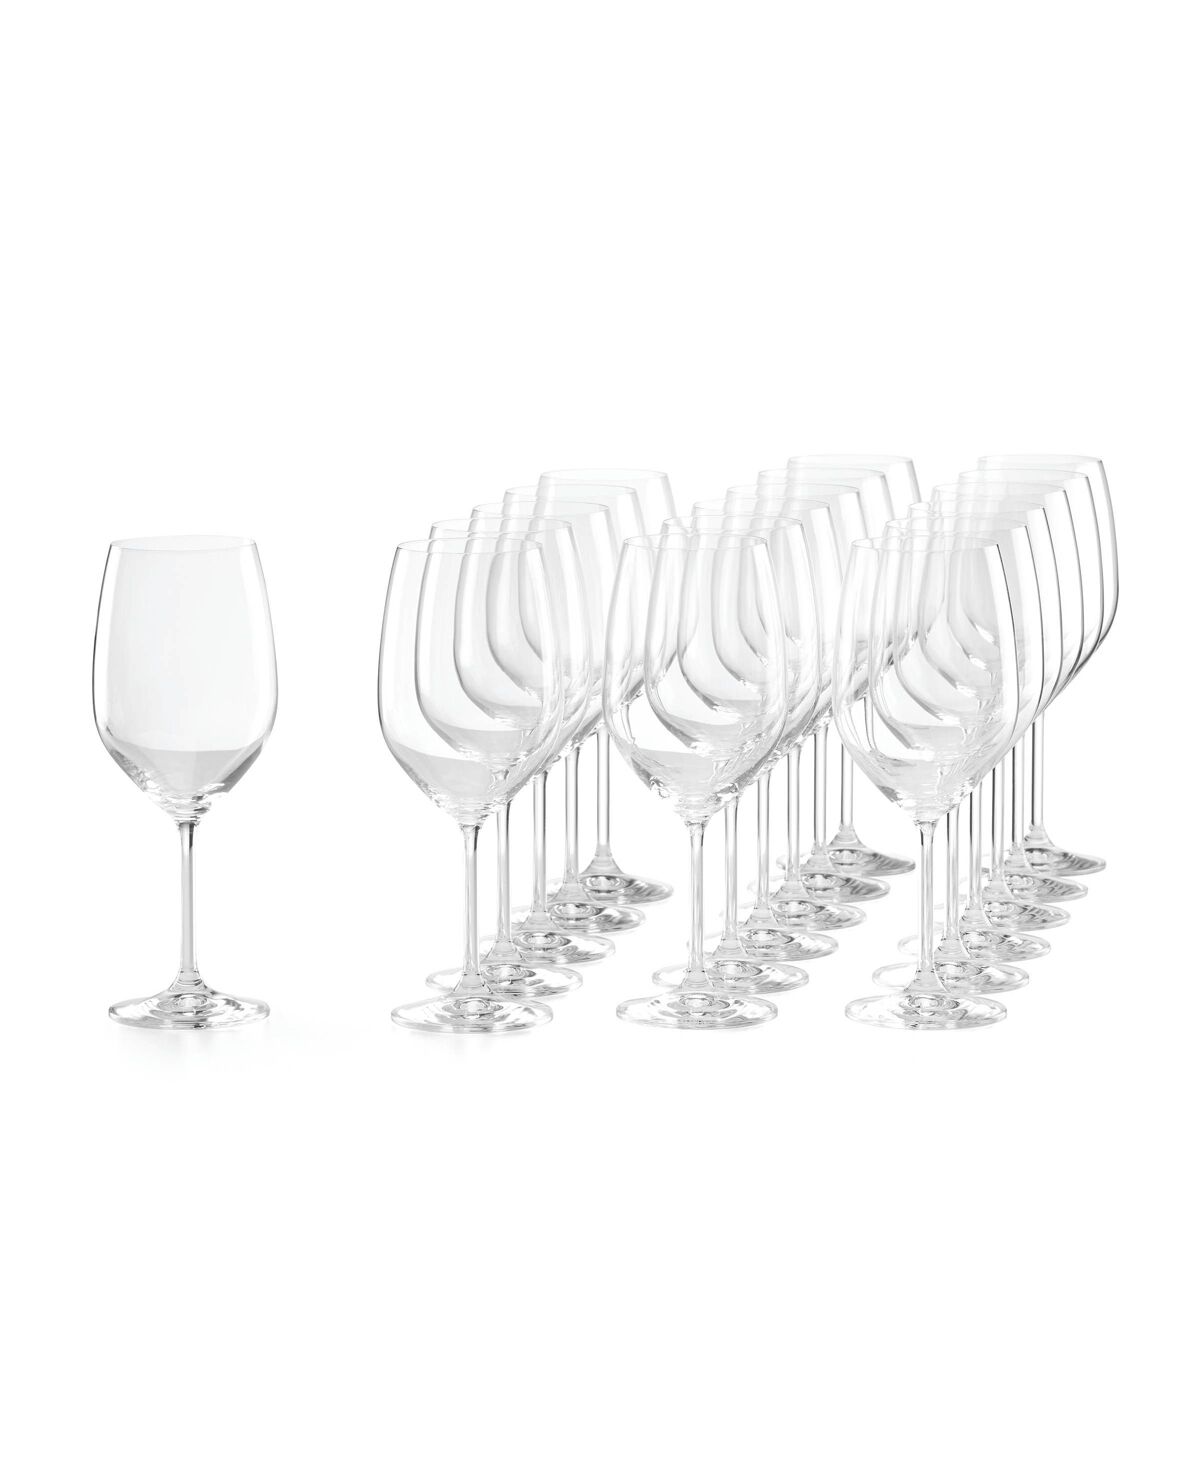 Lenox Tuscany Classics White Wine Glasses, Set of 18 - Clear